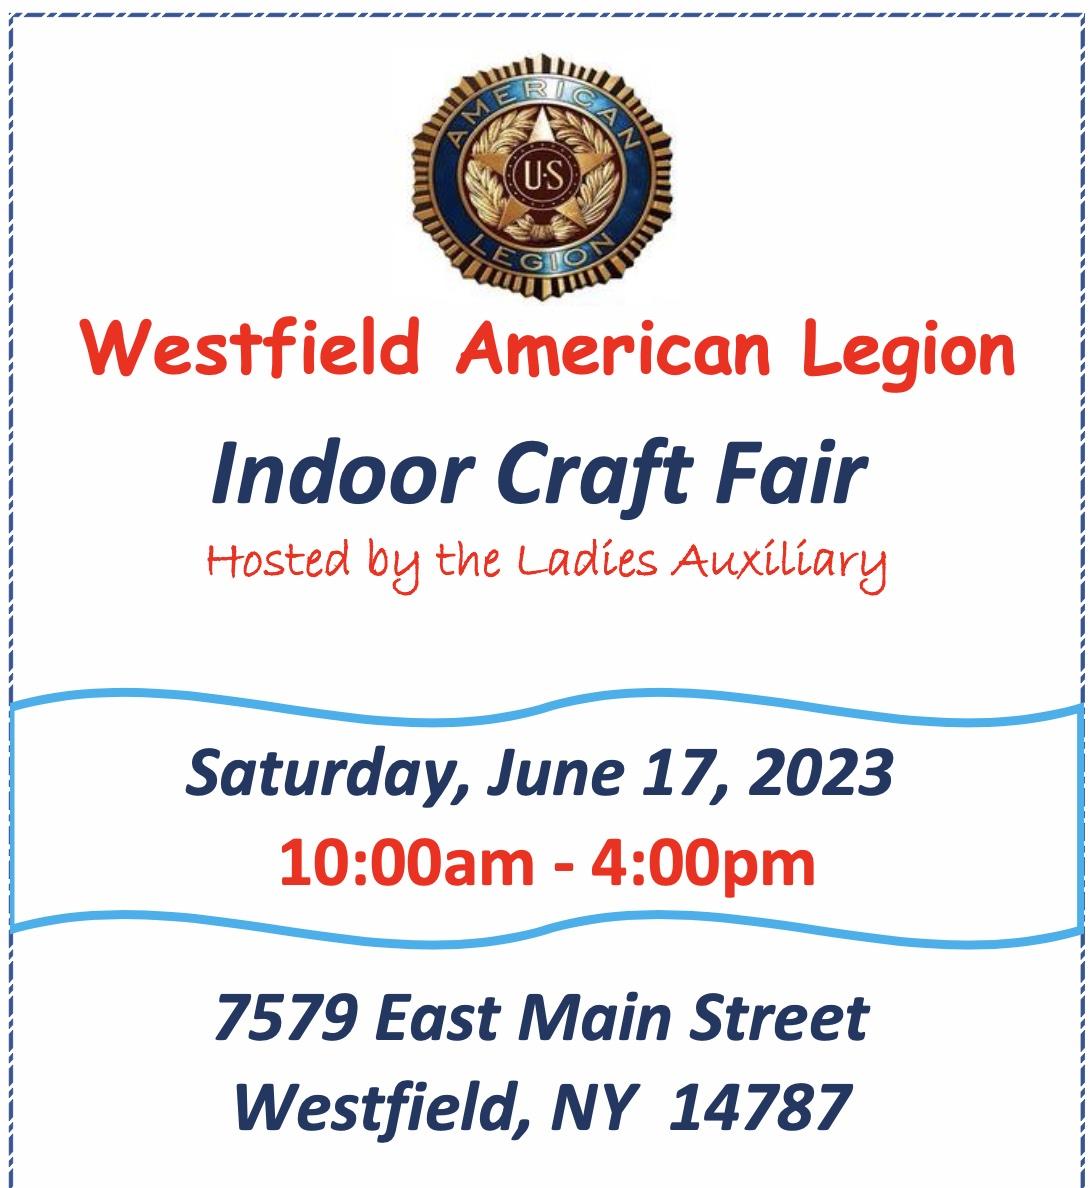 Westfield American Legion Indoor Craft Fair poster